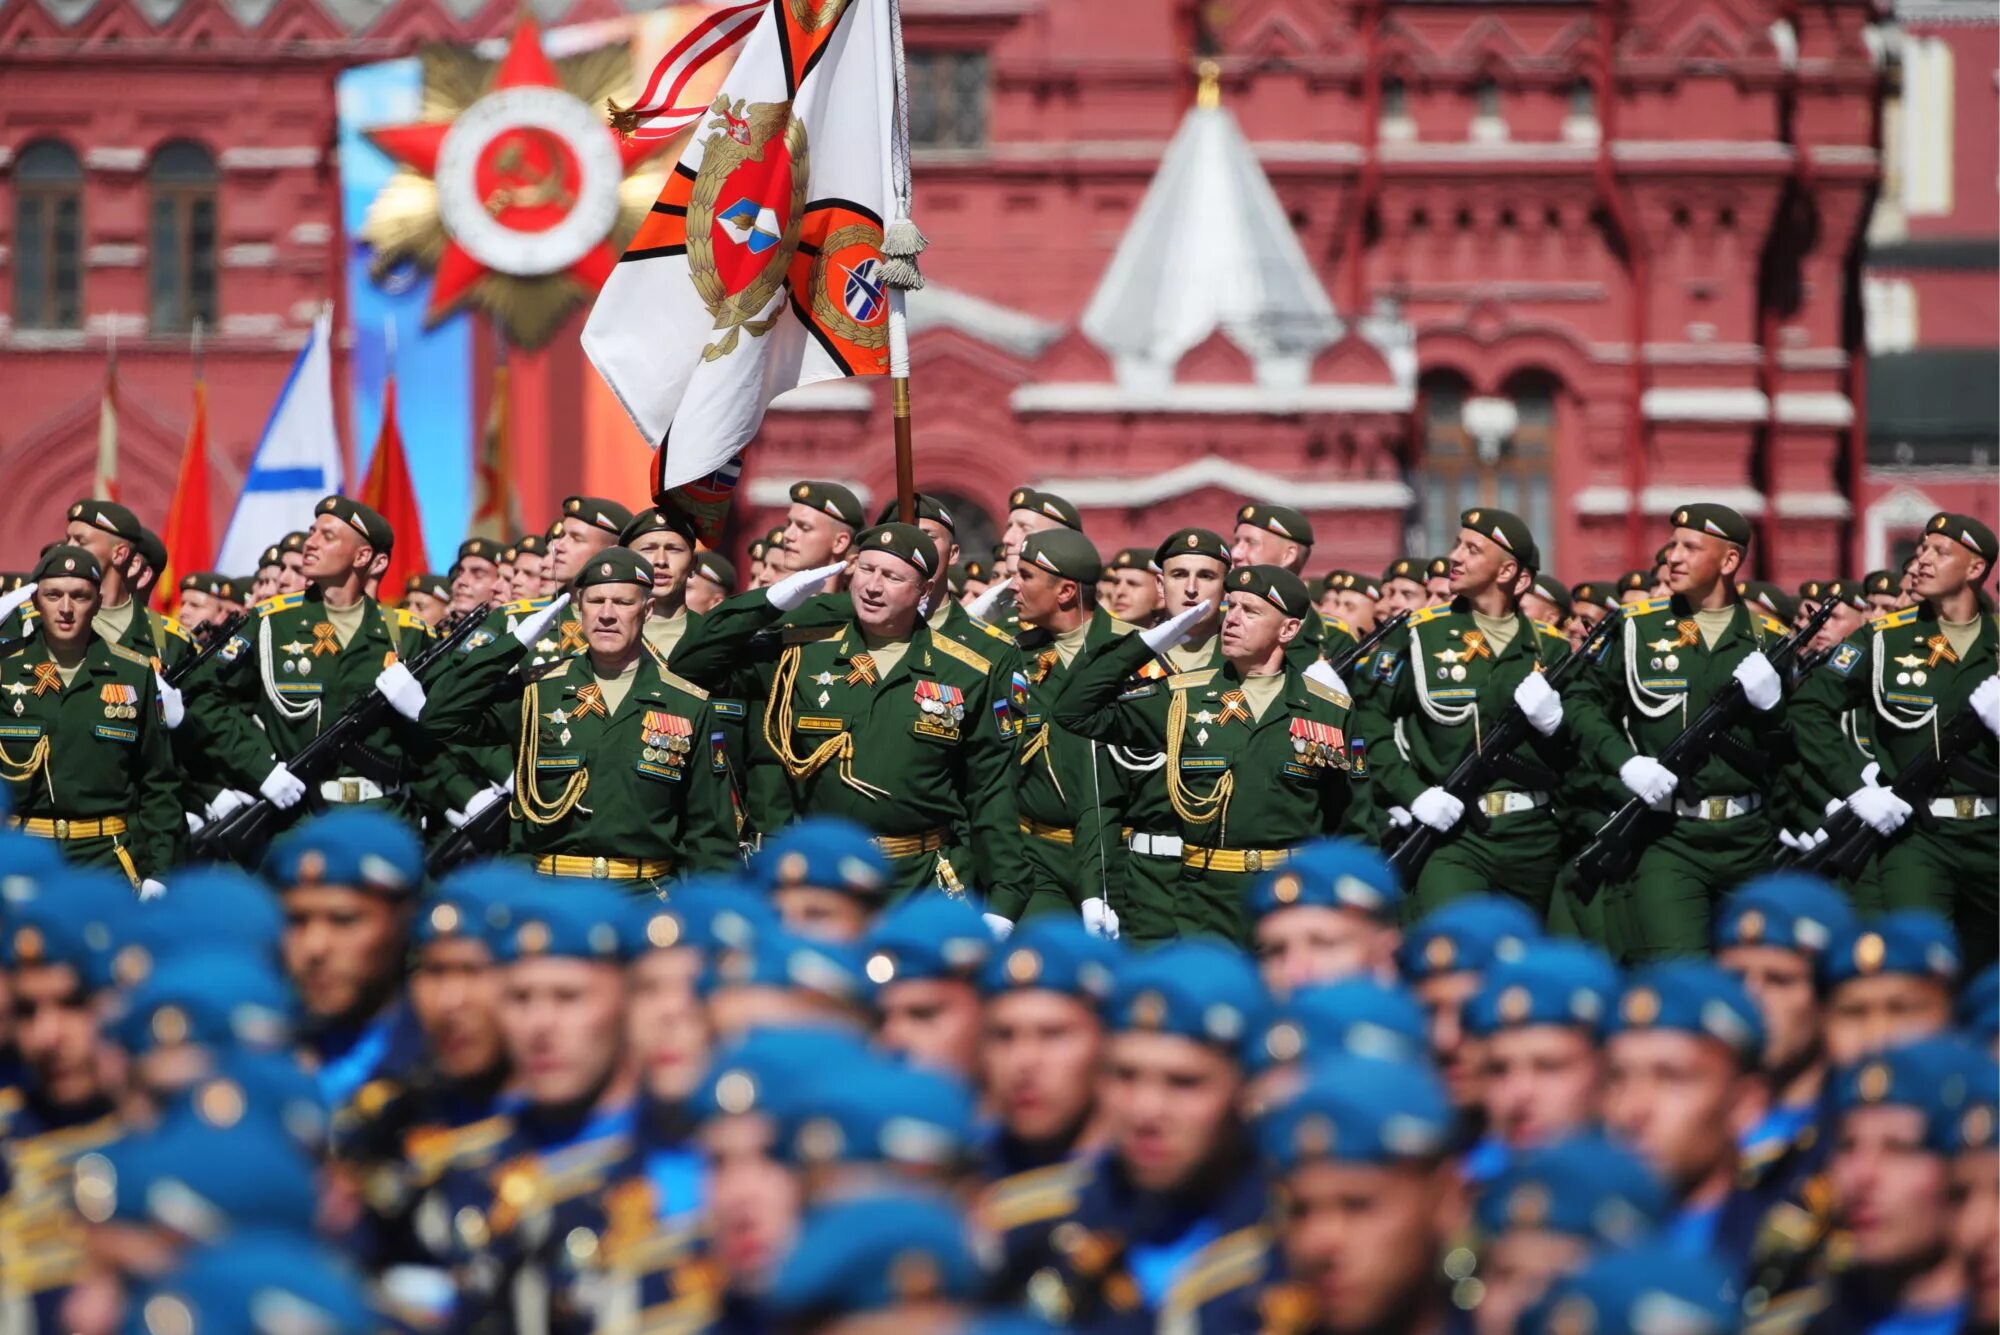 Парад на красной площади. Парад на 23 февраля в Москве. Солдаты на параде Победы. Парад неакрасный площади 23 февраля.